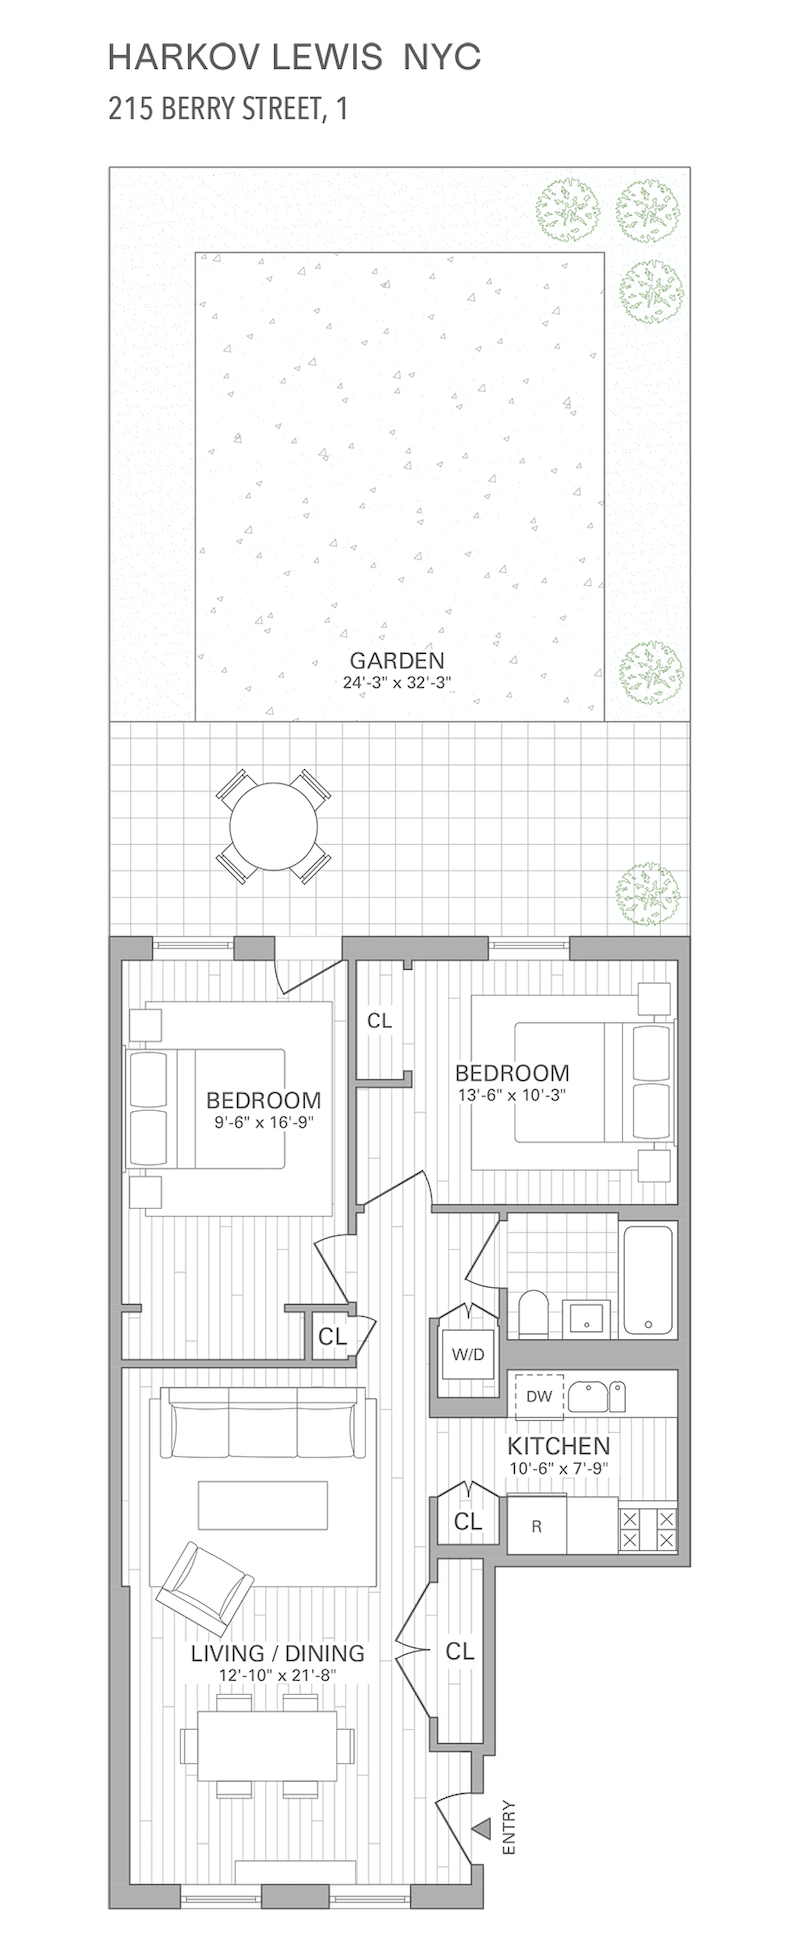 Floorplan for 215 Berry Street